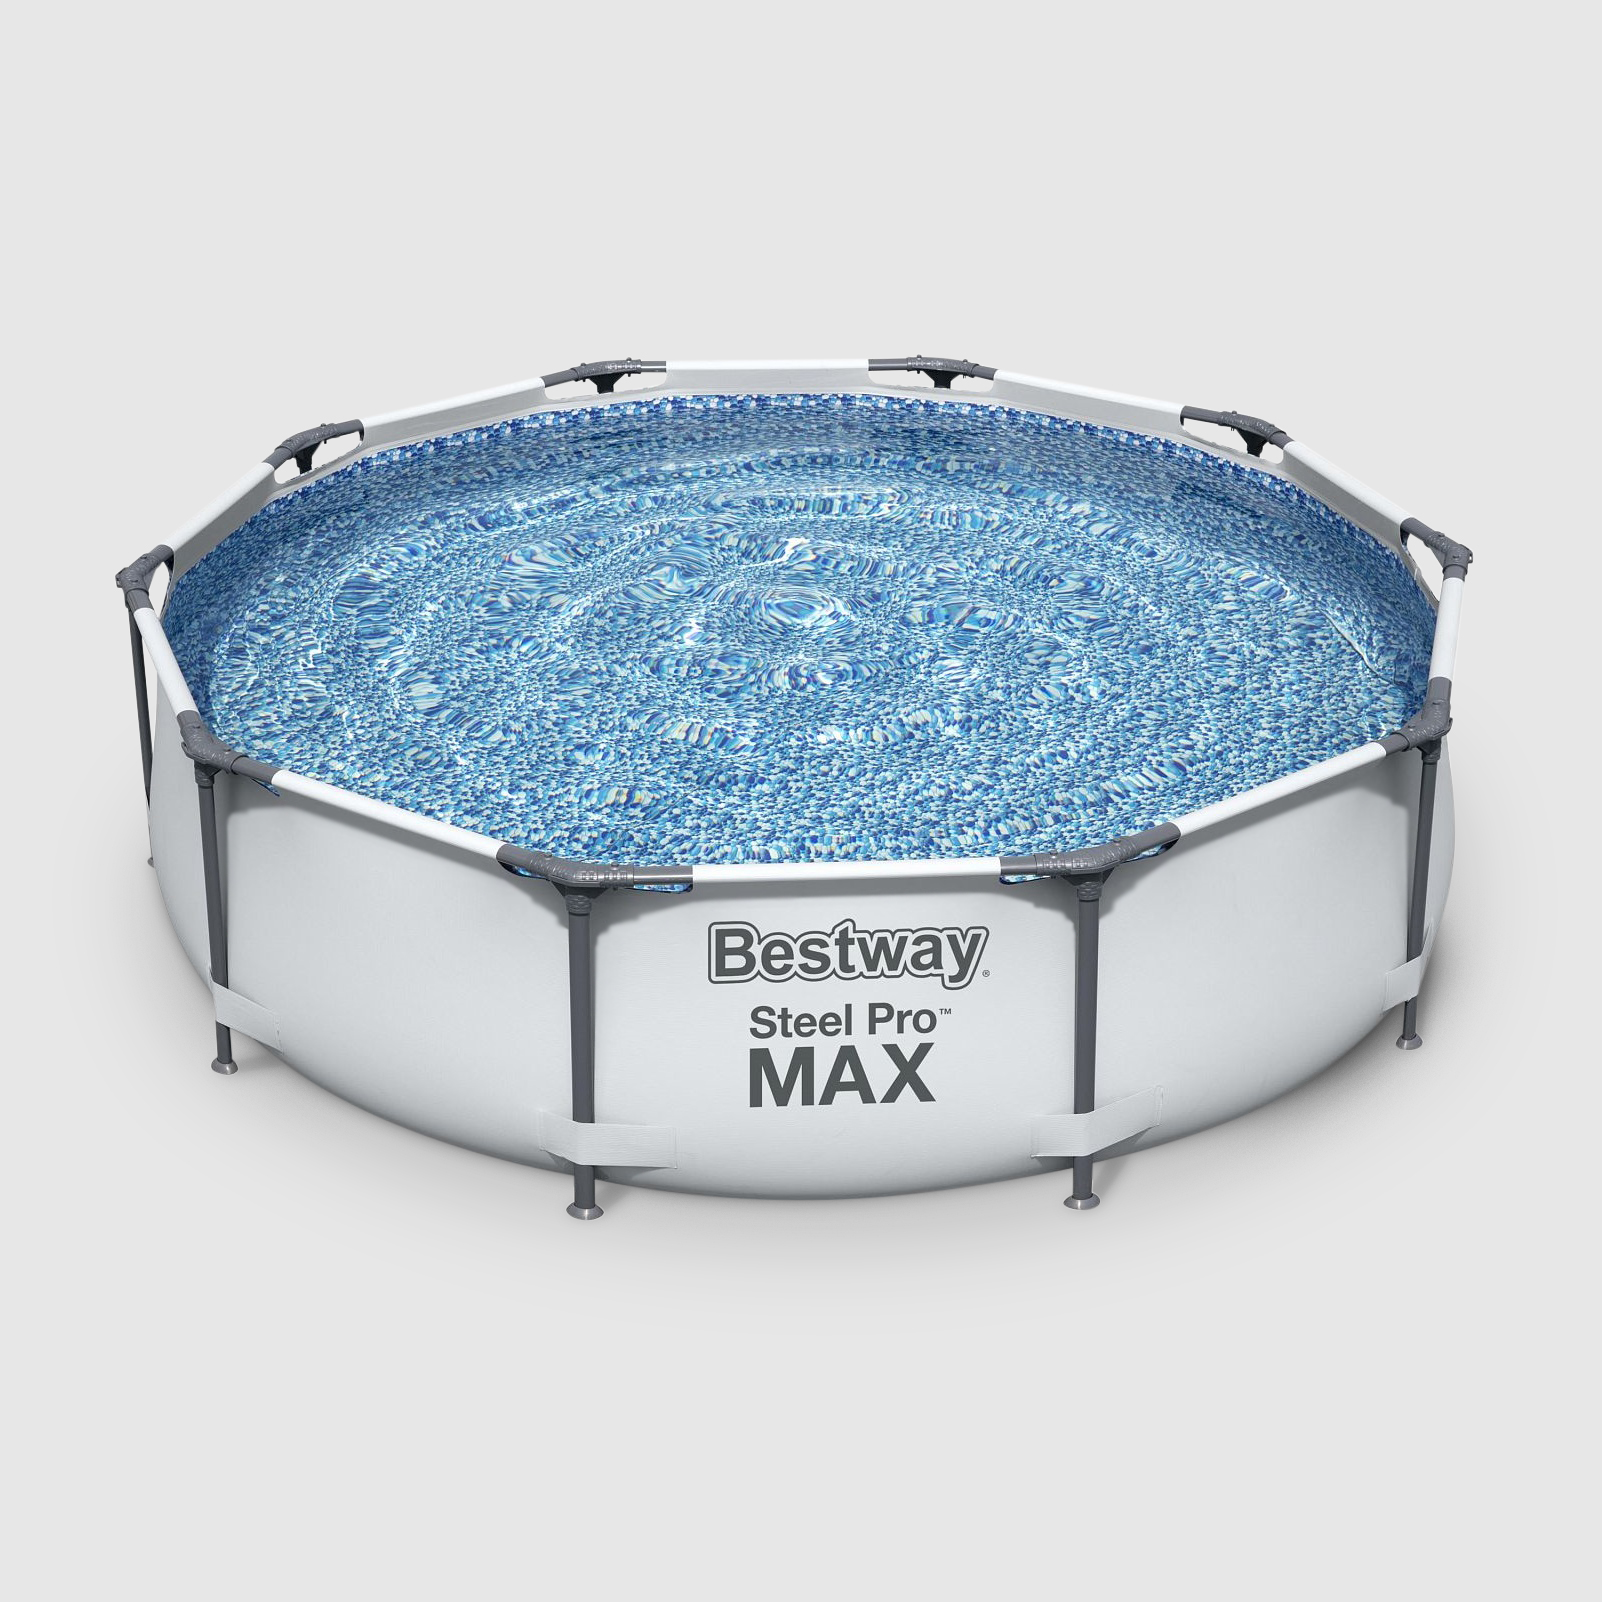 цена Каркасный бассейн Bestway steel pro max 366х122 см набор (56420)